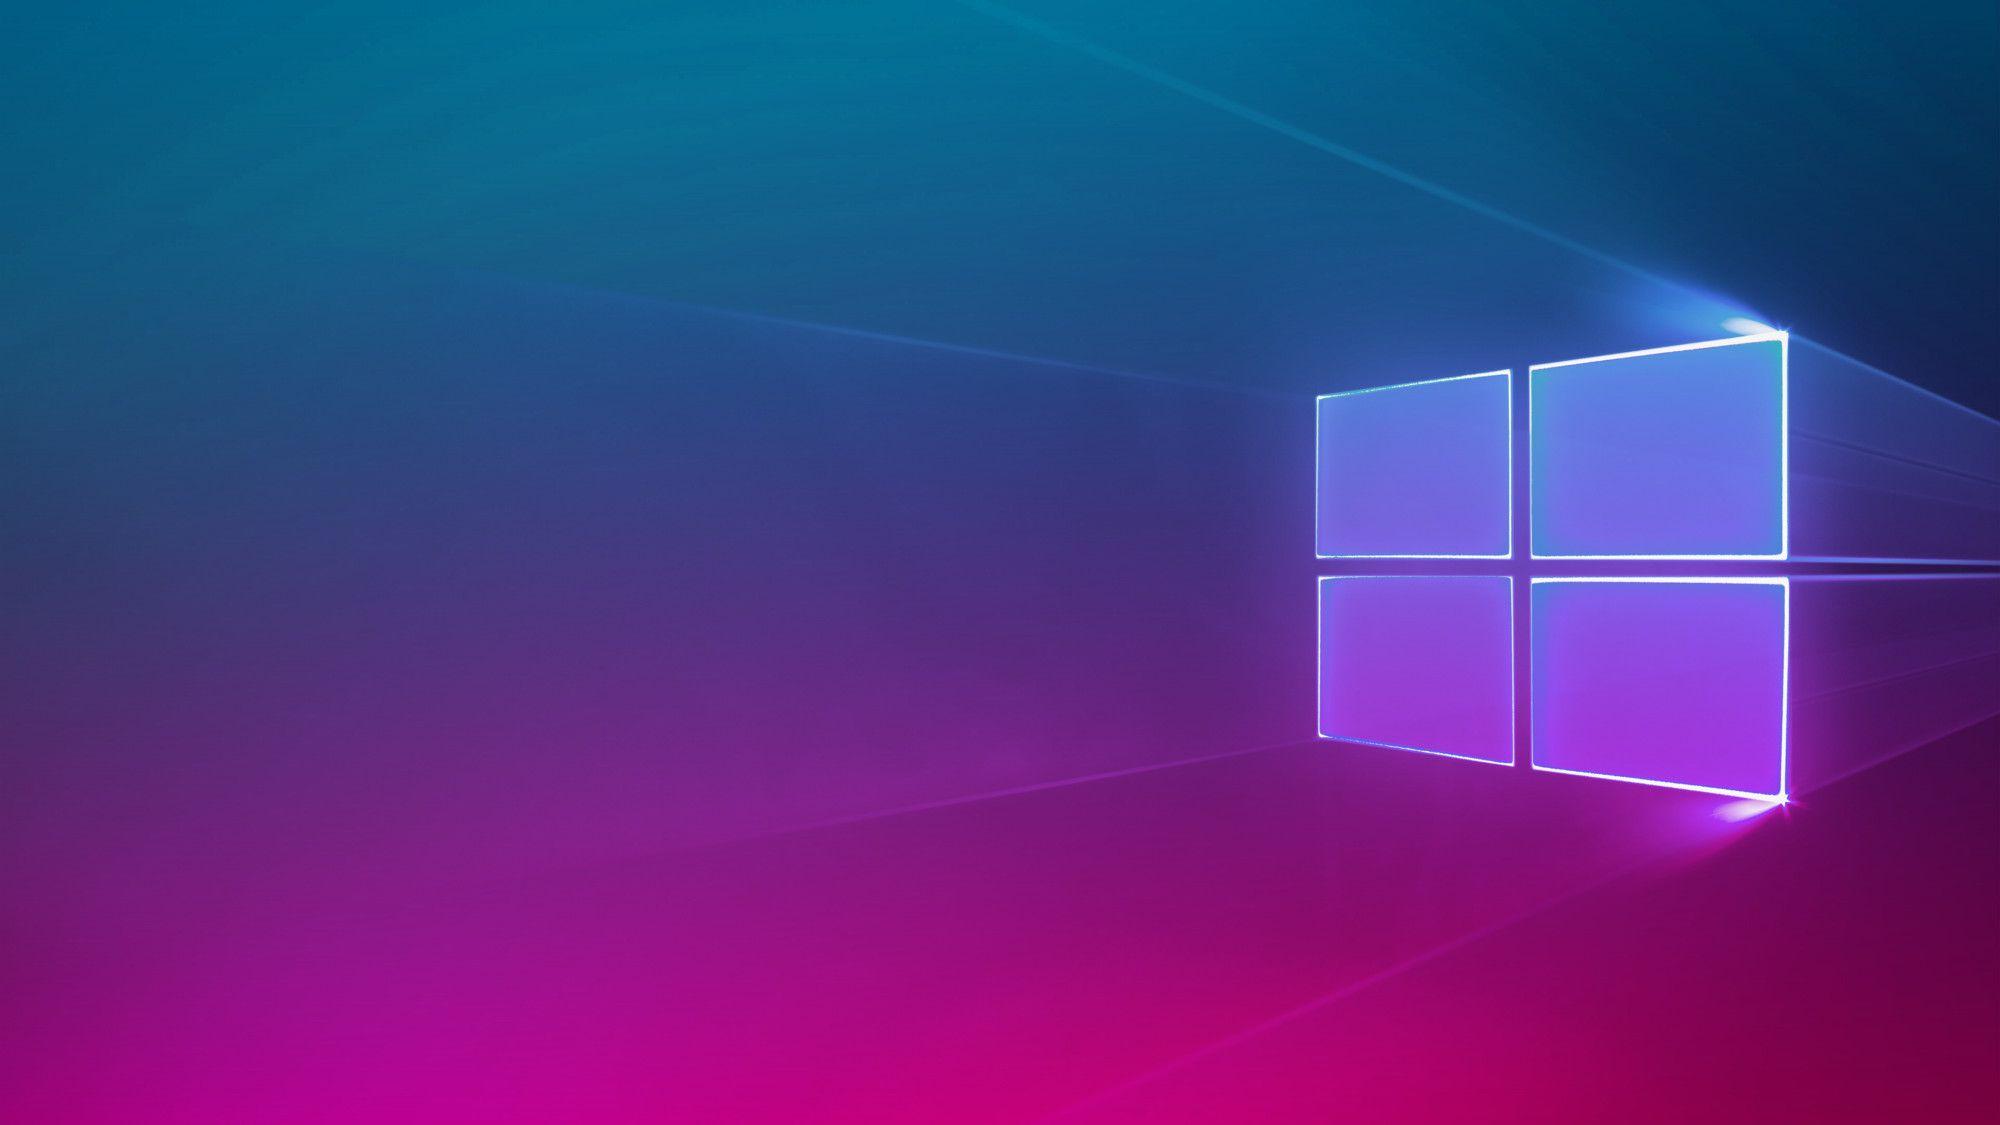 Microsoft Windows 10 Wallpapers Top Free Microsoft Windows 10 Images, Photos, Reviews